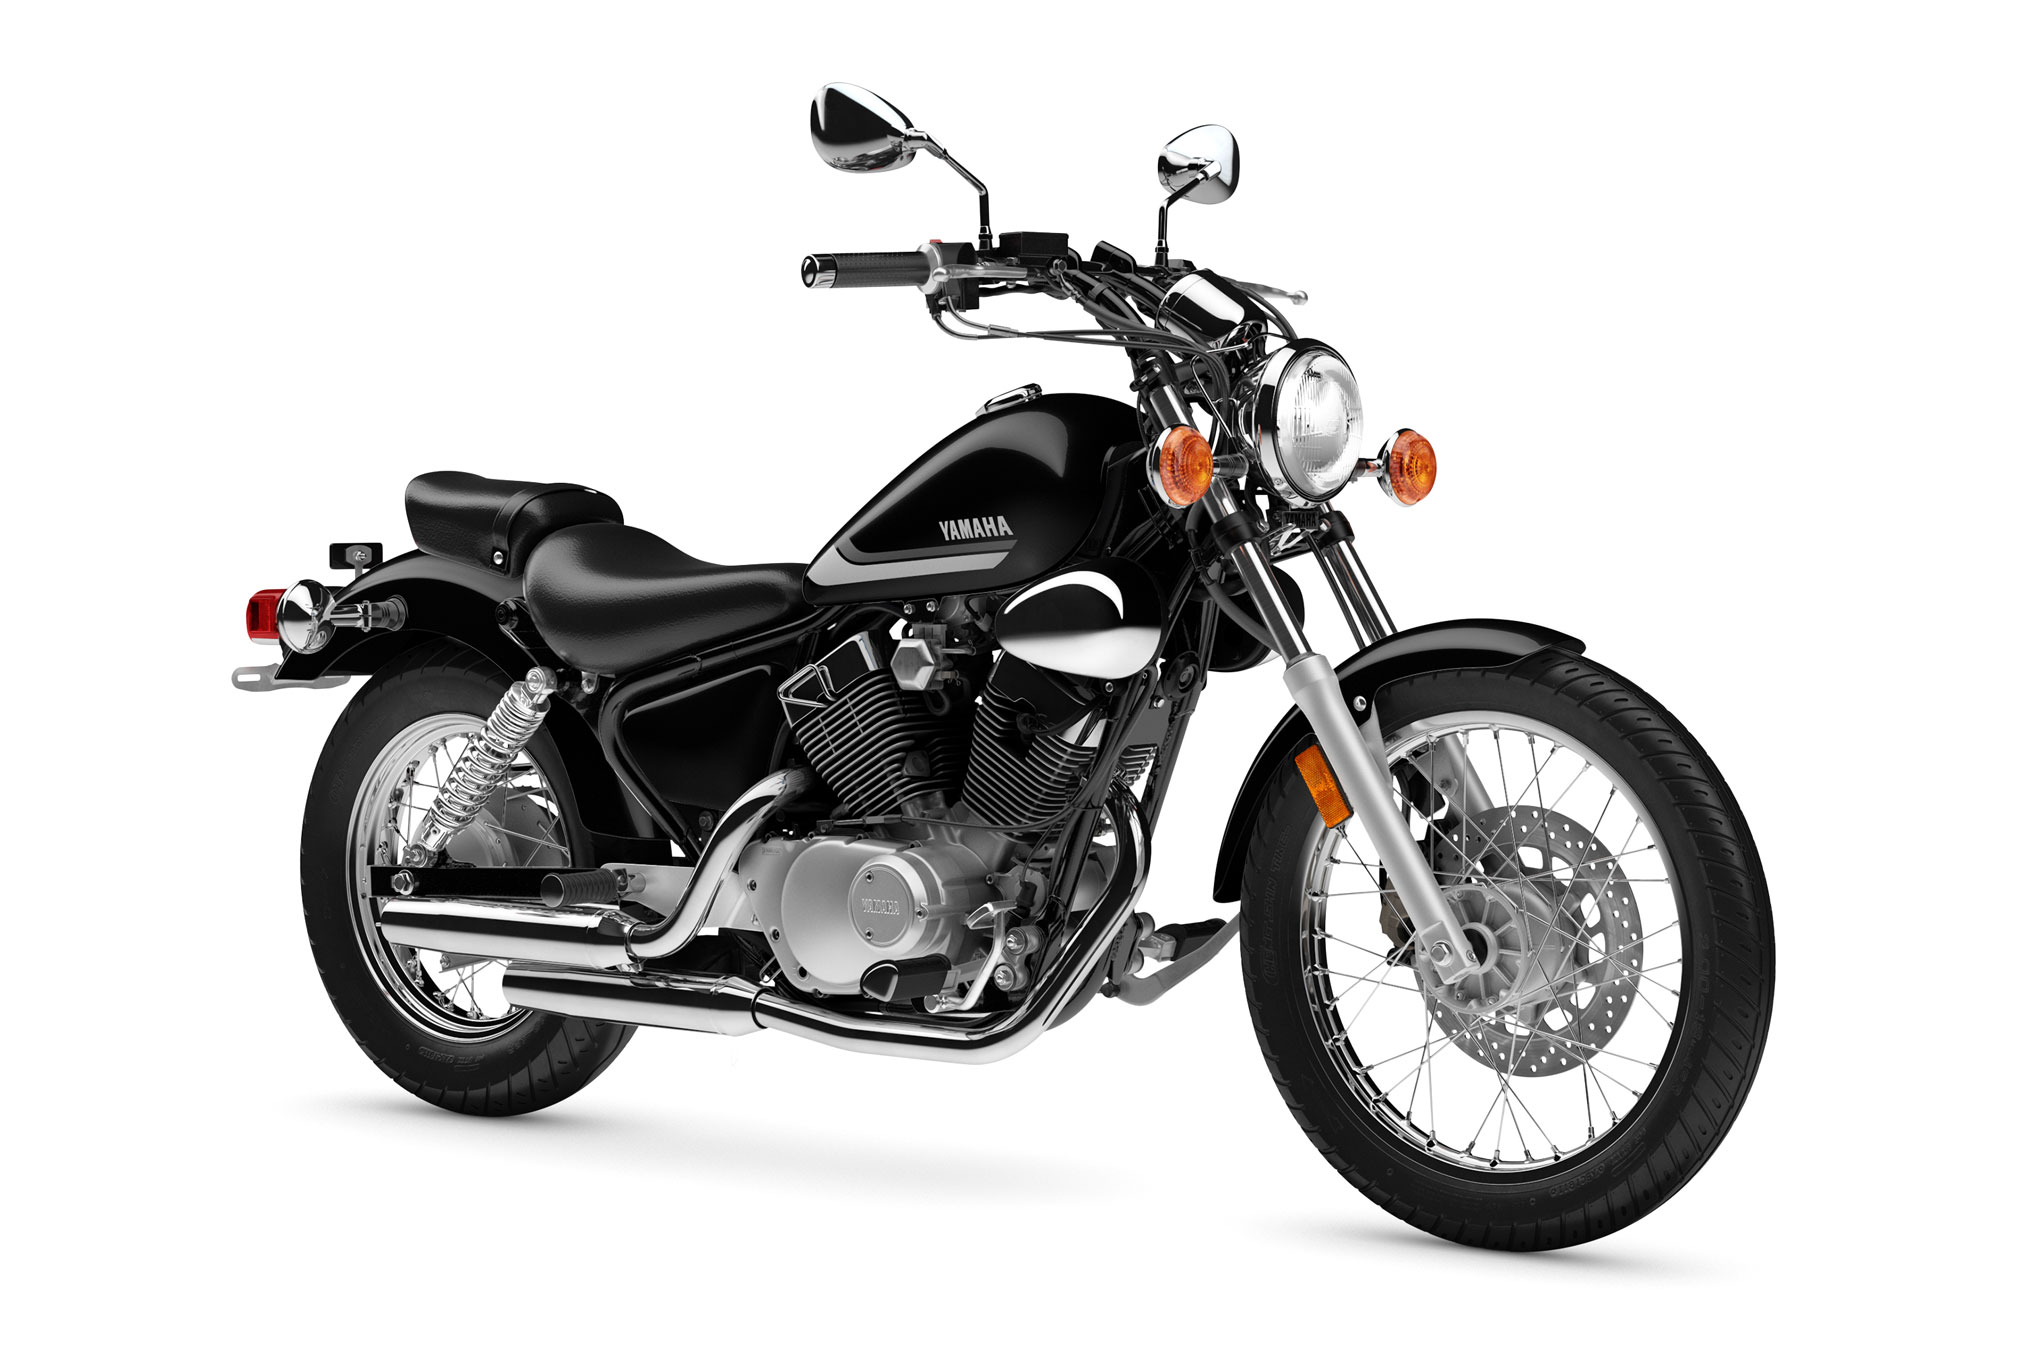 2021 Yamaha V-Star 250 Guide • Total Motorcycle